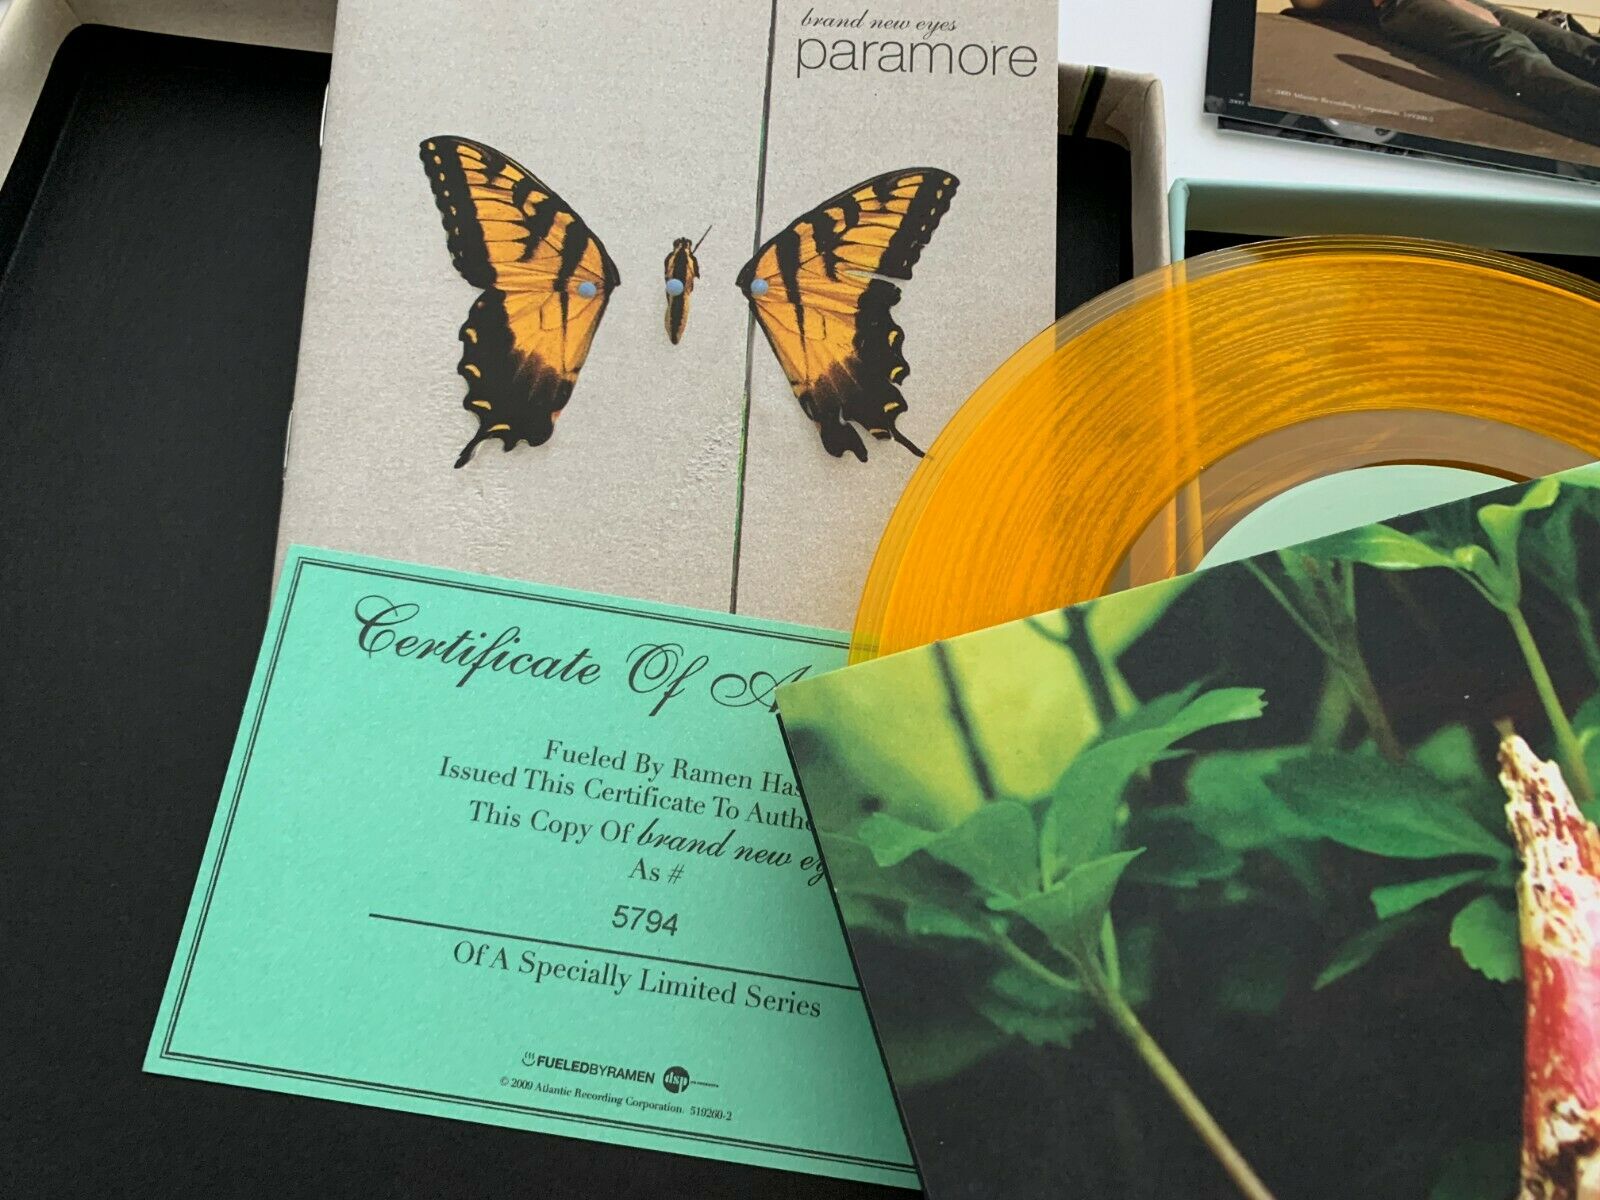  Paramore Brand New Eyes Vinyl Boxset - Rare - no poster -  auction details